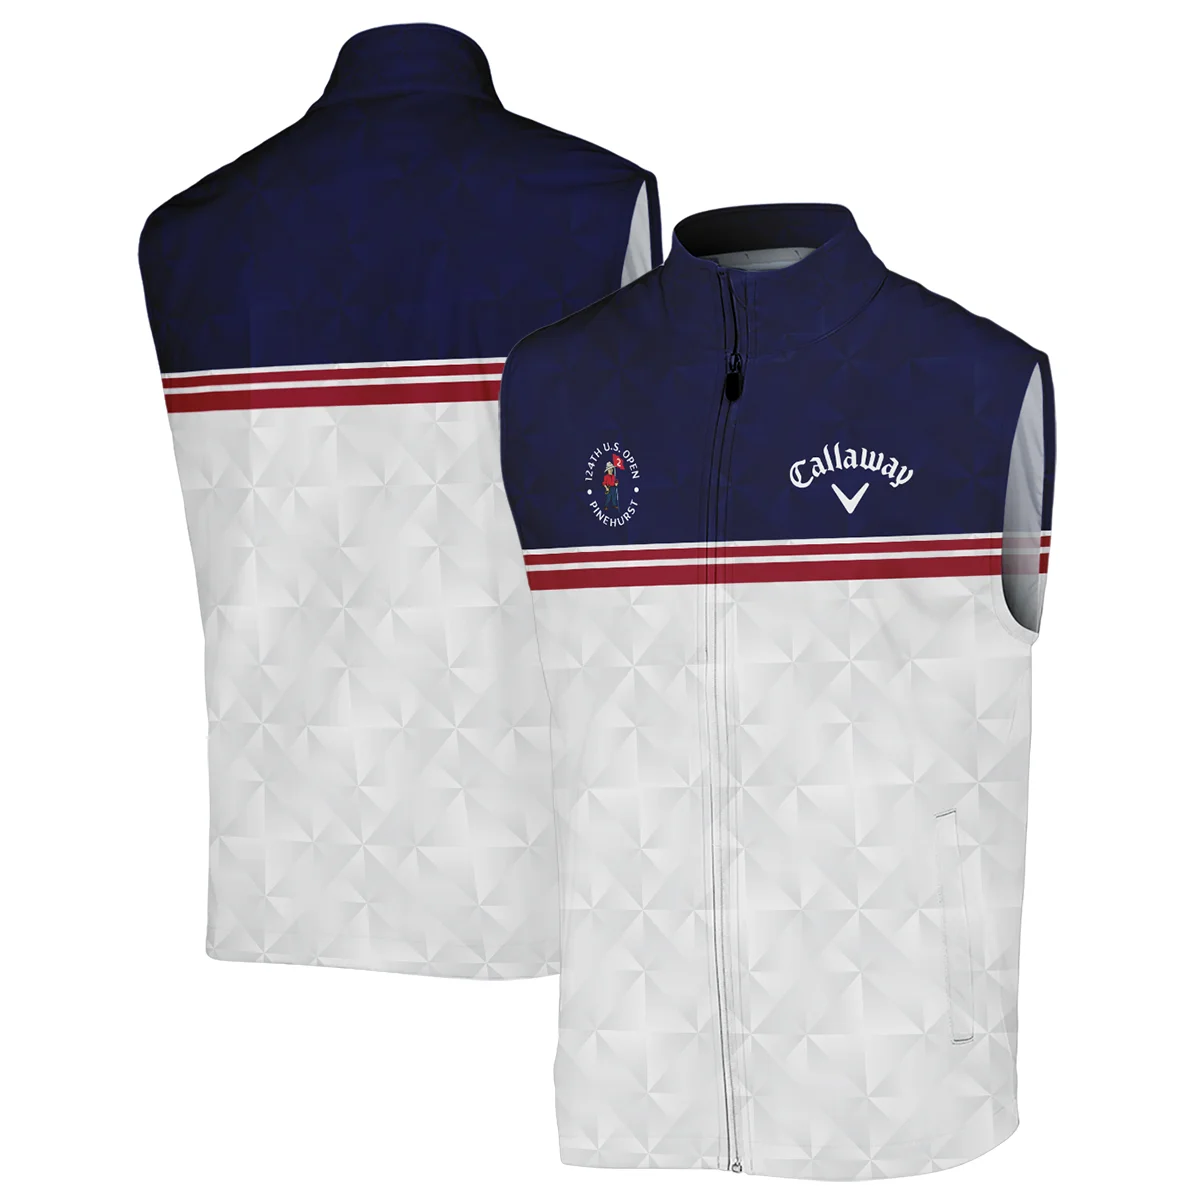 Golf Sport 124th U.S. Open Pinehurst Callaway Polo Shirt Dark Blue White Abstract Geometric Triangles All Over Print Polo Shirt For Men